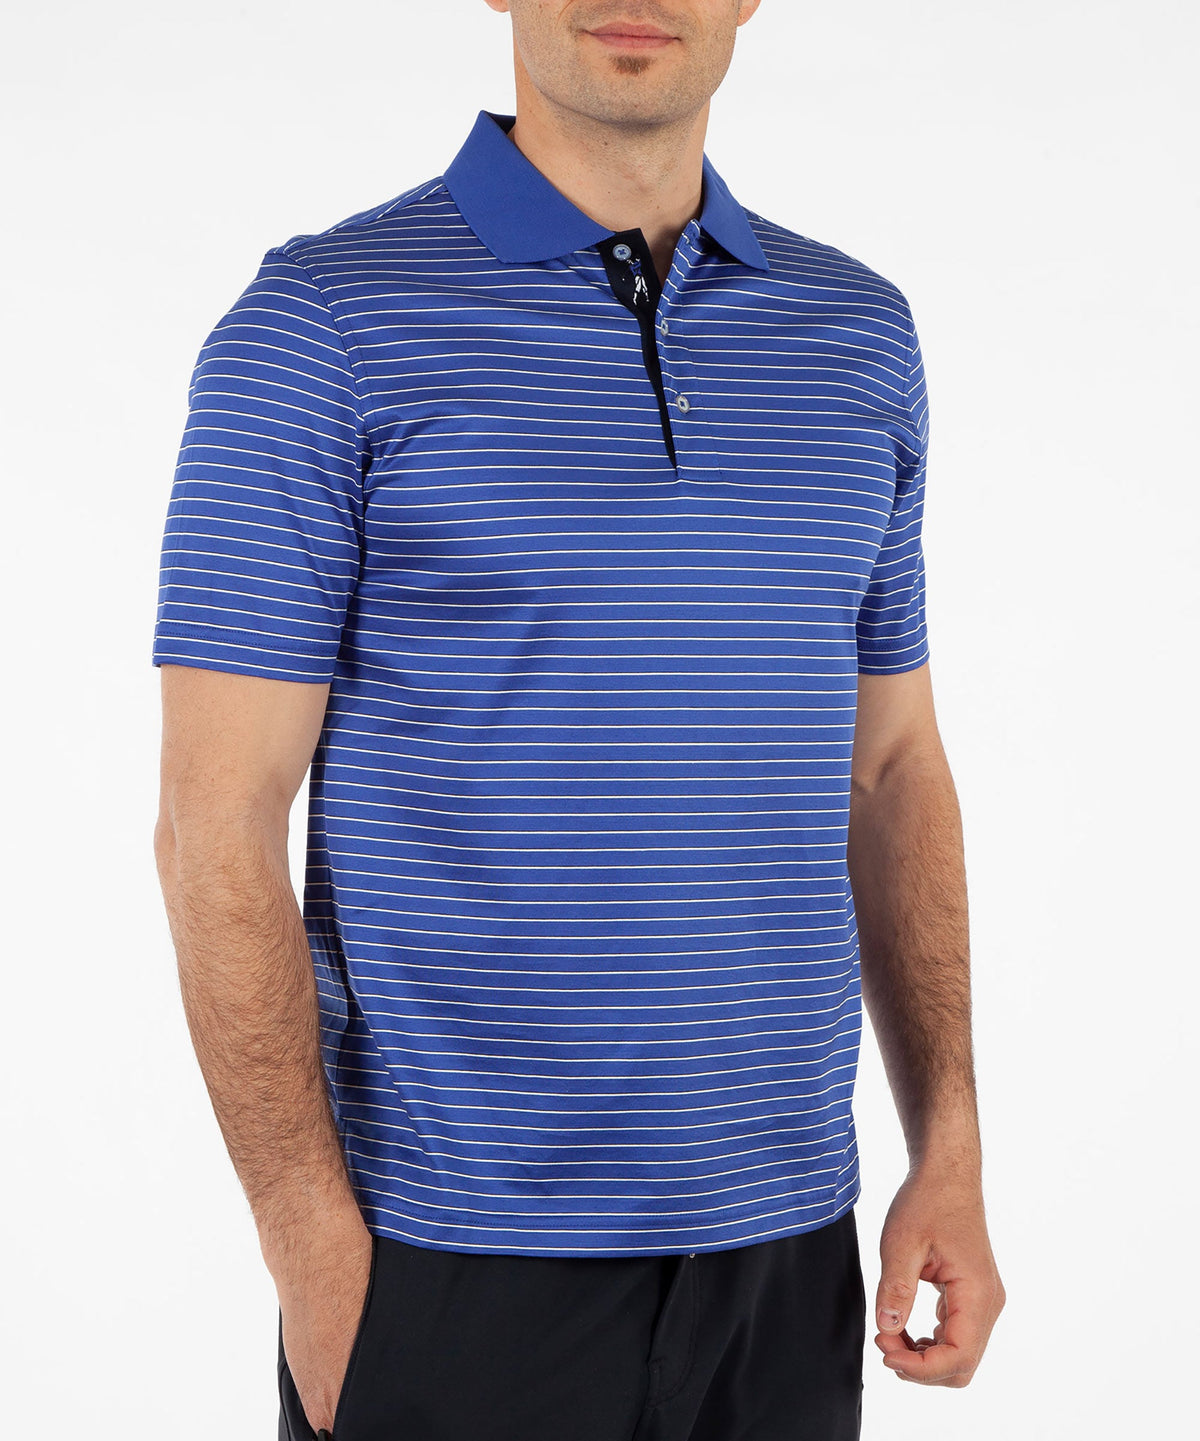 Signature Pisano Stripe 100% Mercerized Cotton Short Sleeve Polo Shirt